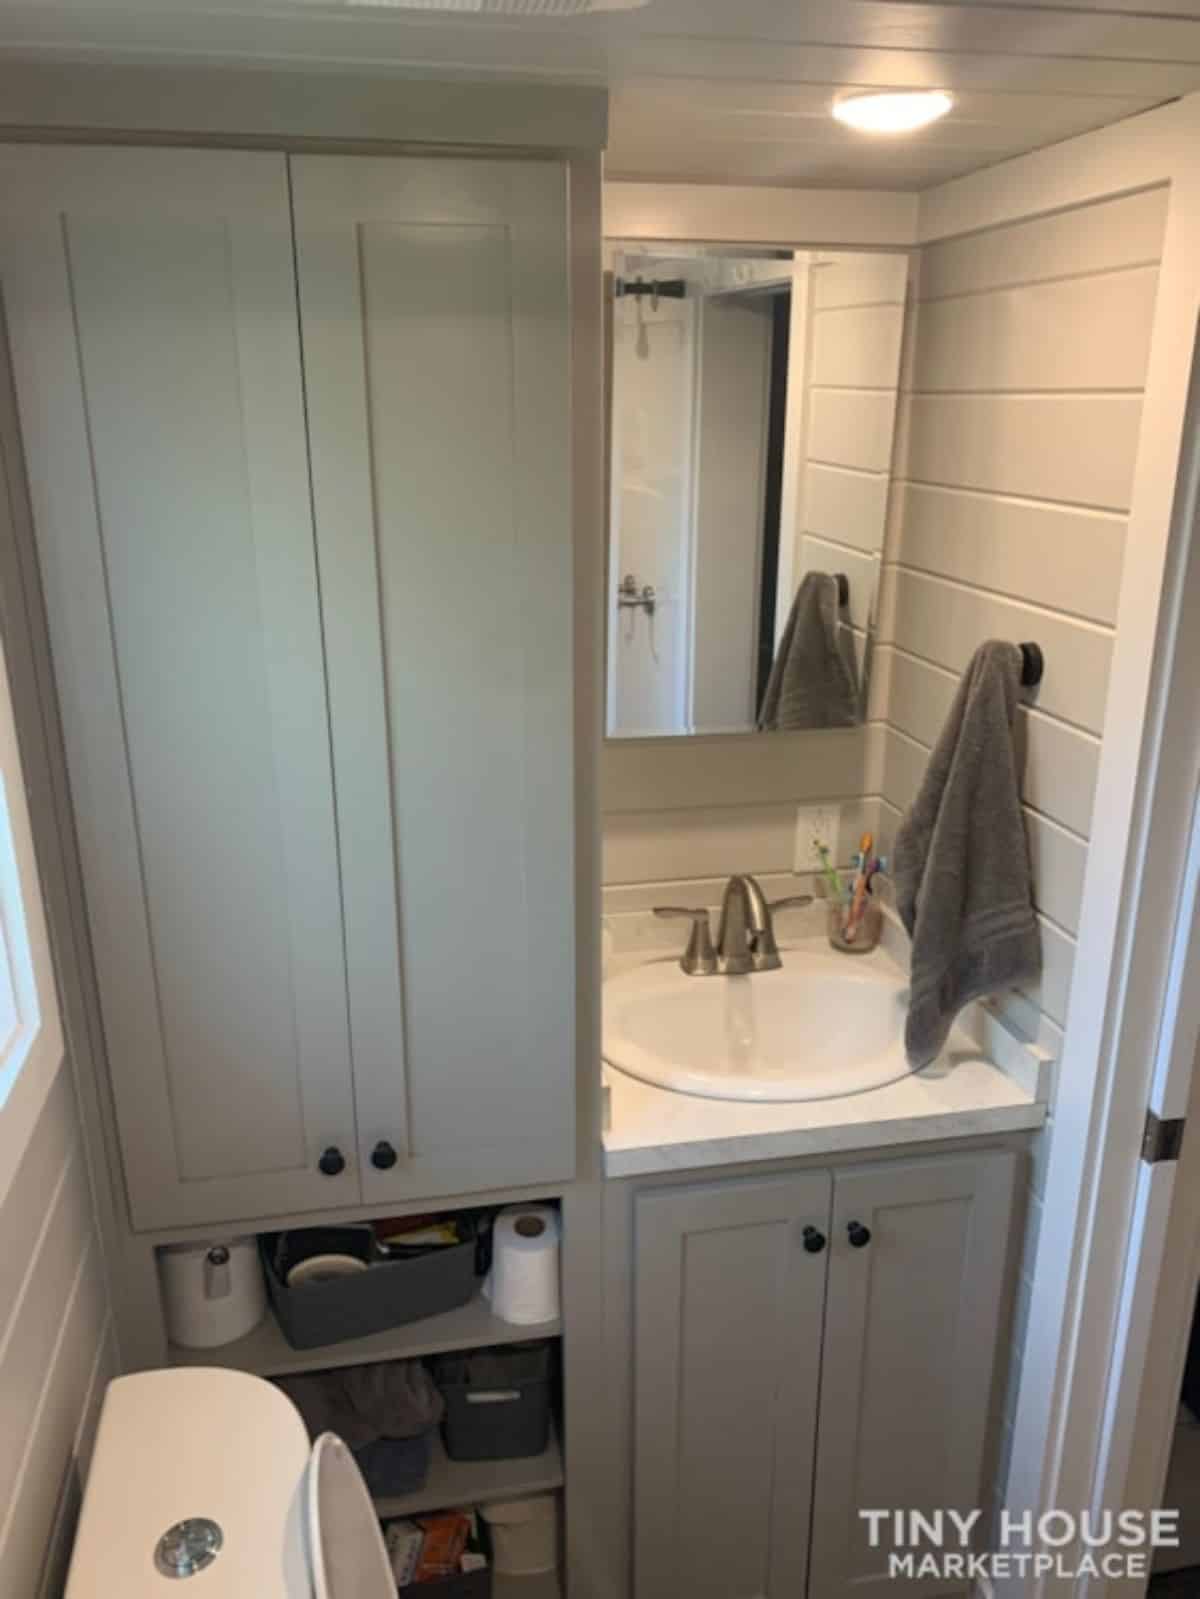 Sink cum vanity & mirror in bathroom of towable tiny home